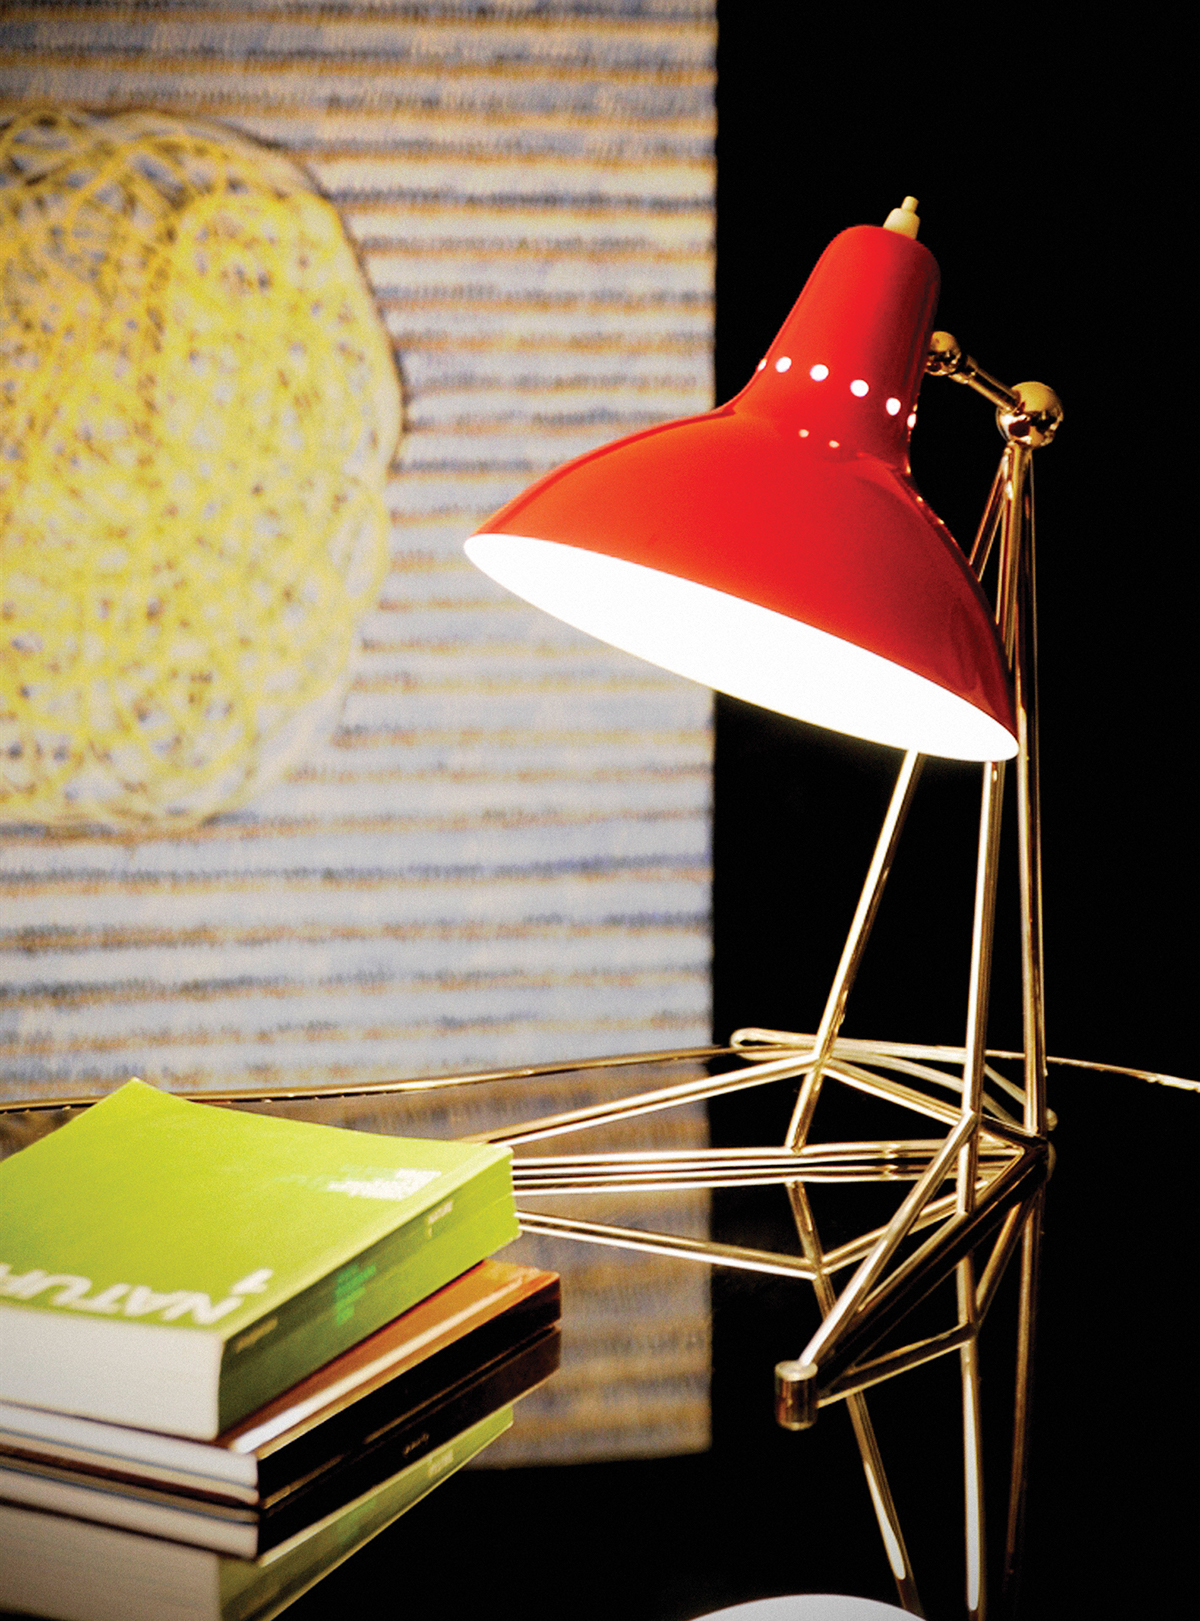 Desk lamp red Lamp charismatic lamp minotti lamps decorative kids lamp colorful lampshade home lighting vintage light